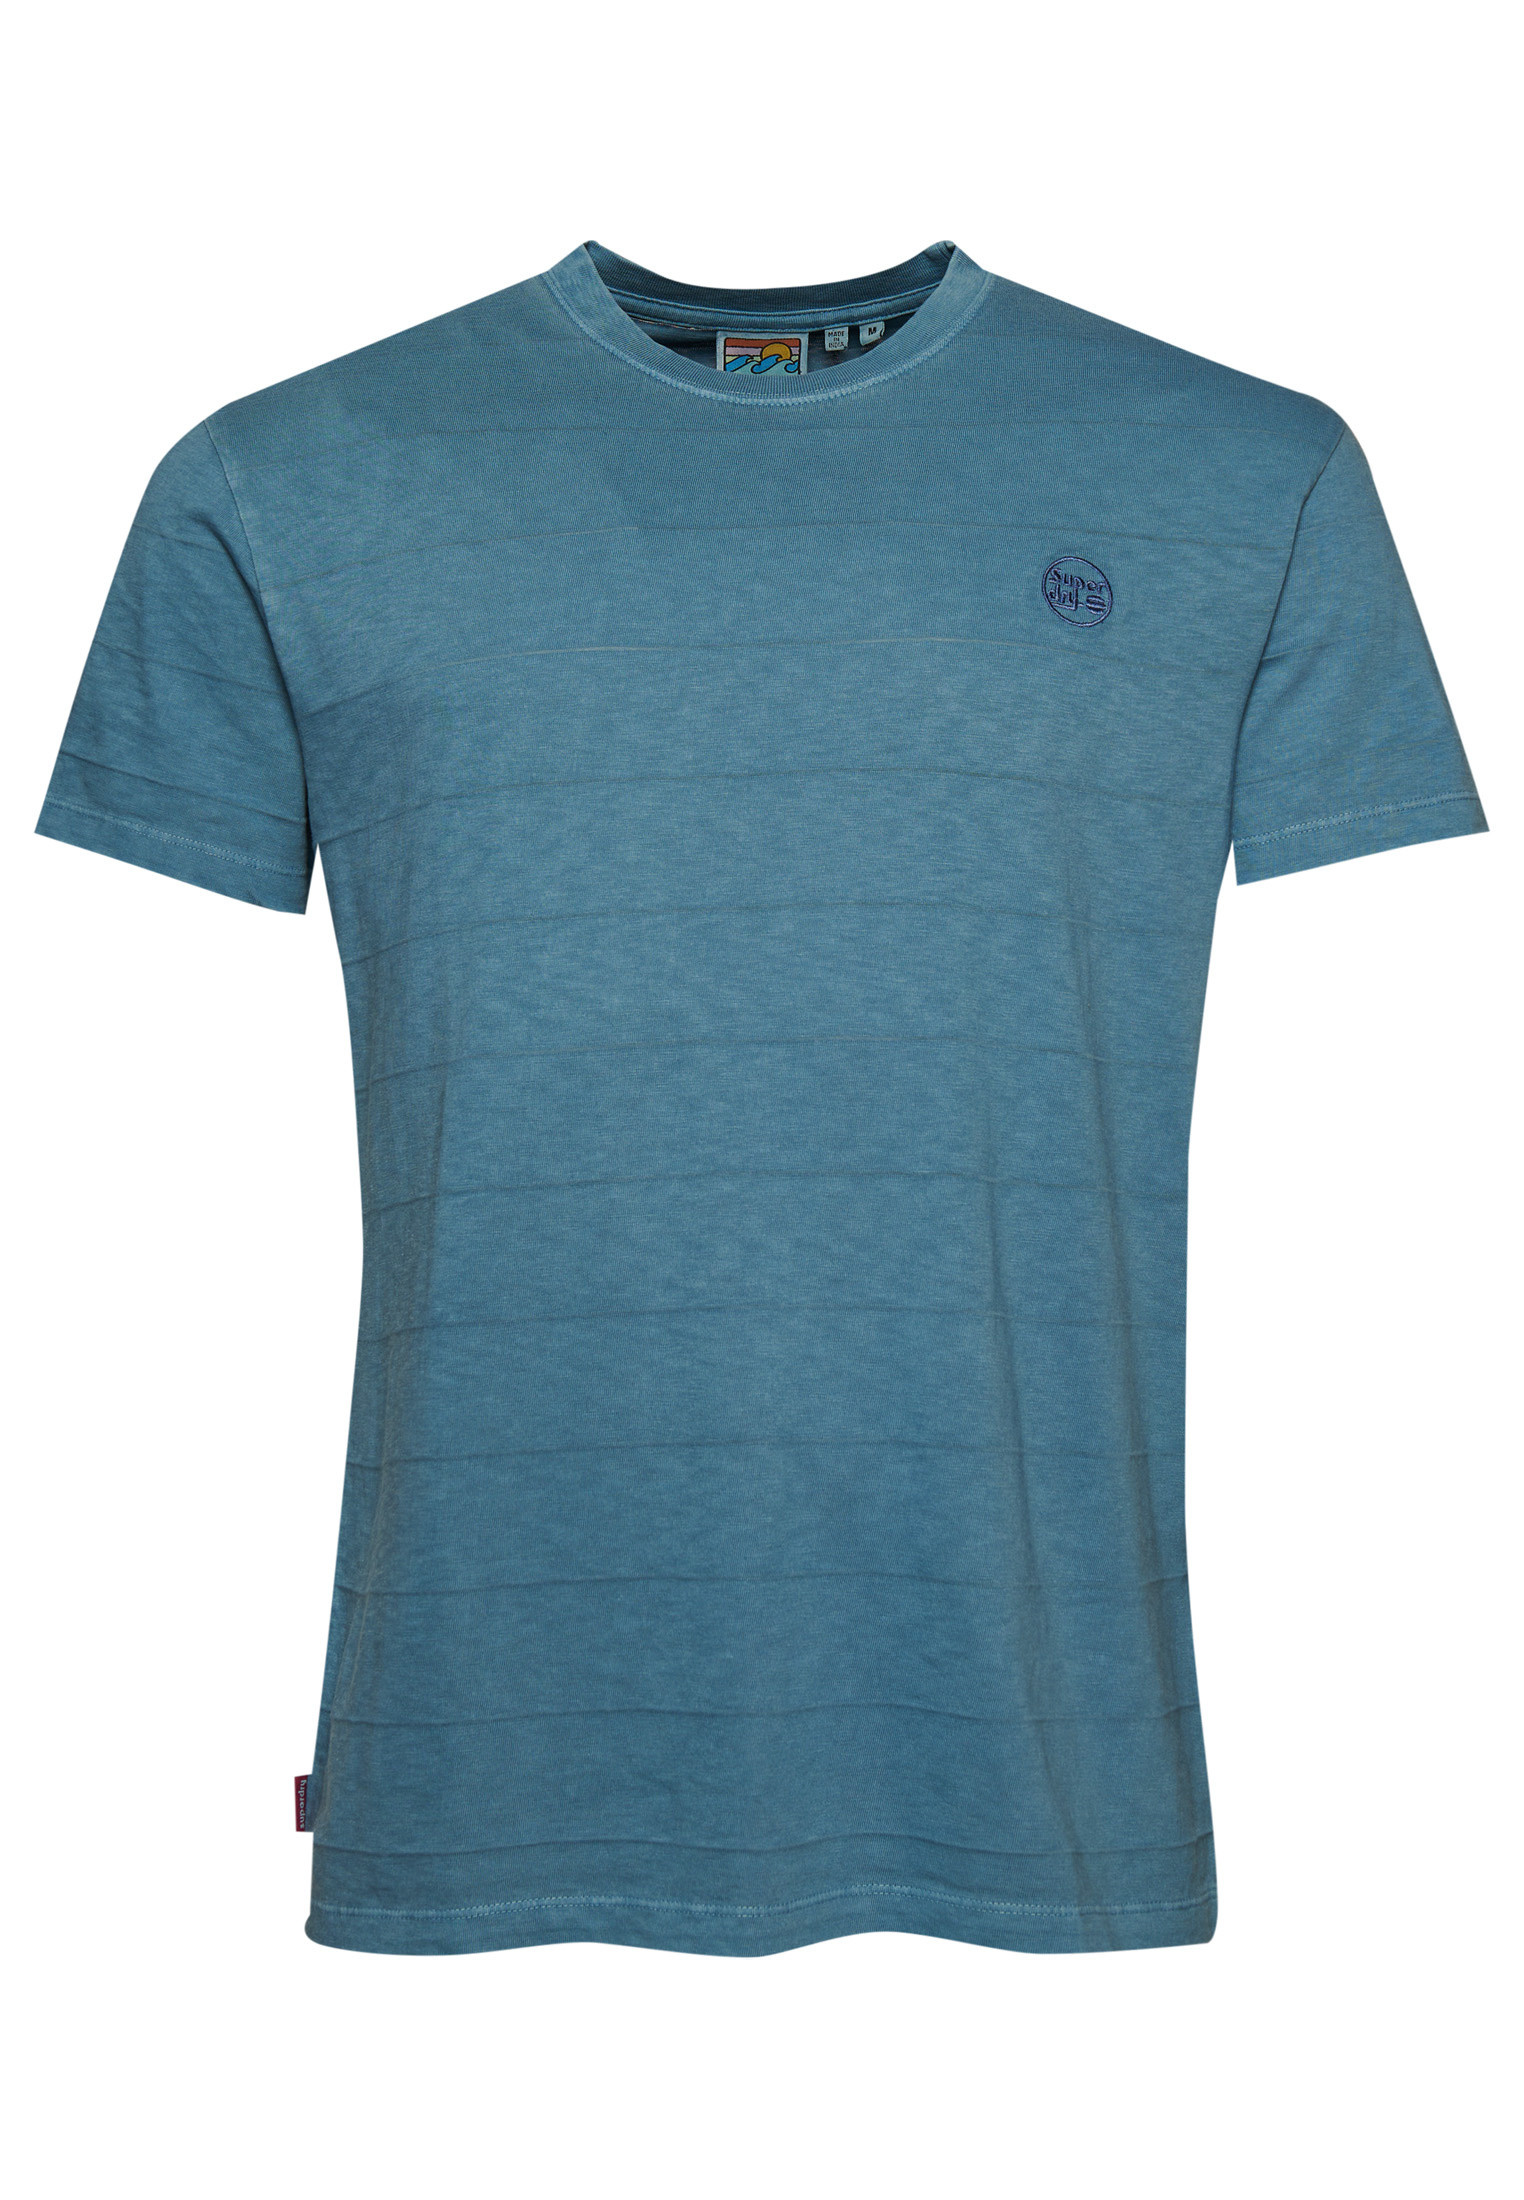 Superdry - T-shirt rigata effetto vintage, Azzurro, large image number 0